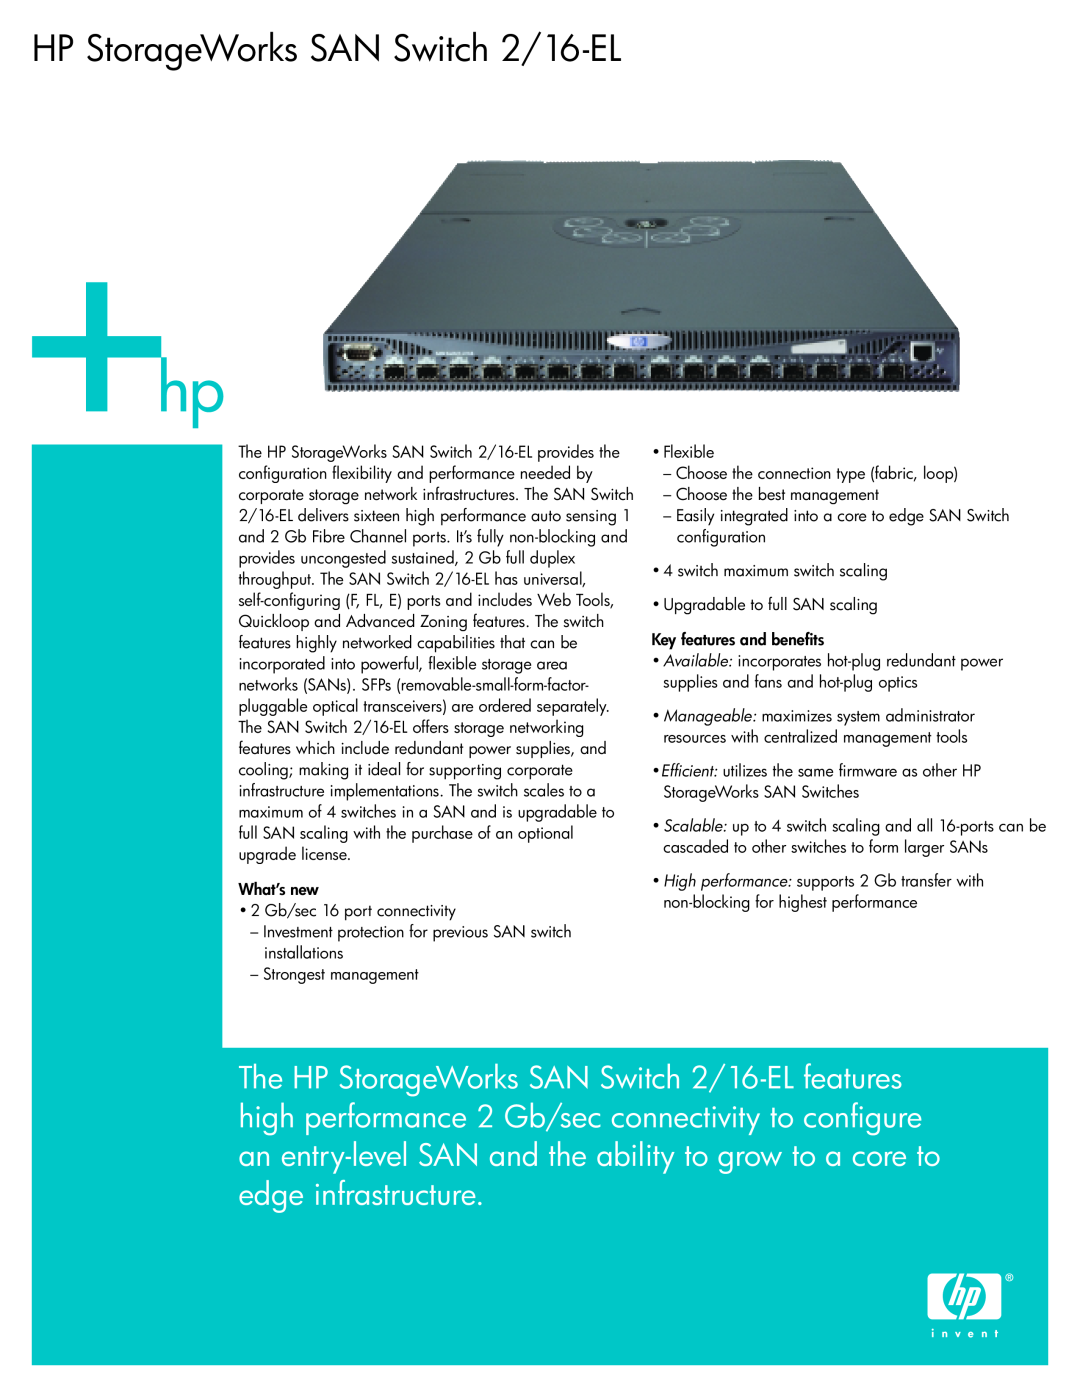 Compaq manual HP StorageWorks SAN Switch 2/16-EL 